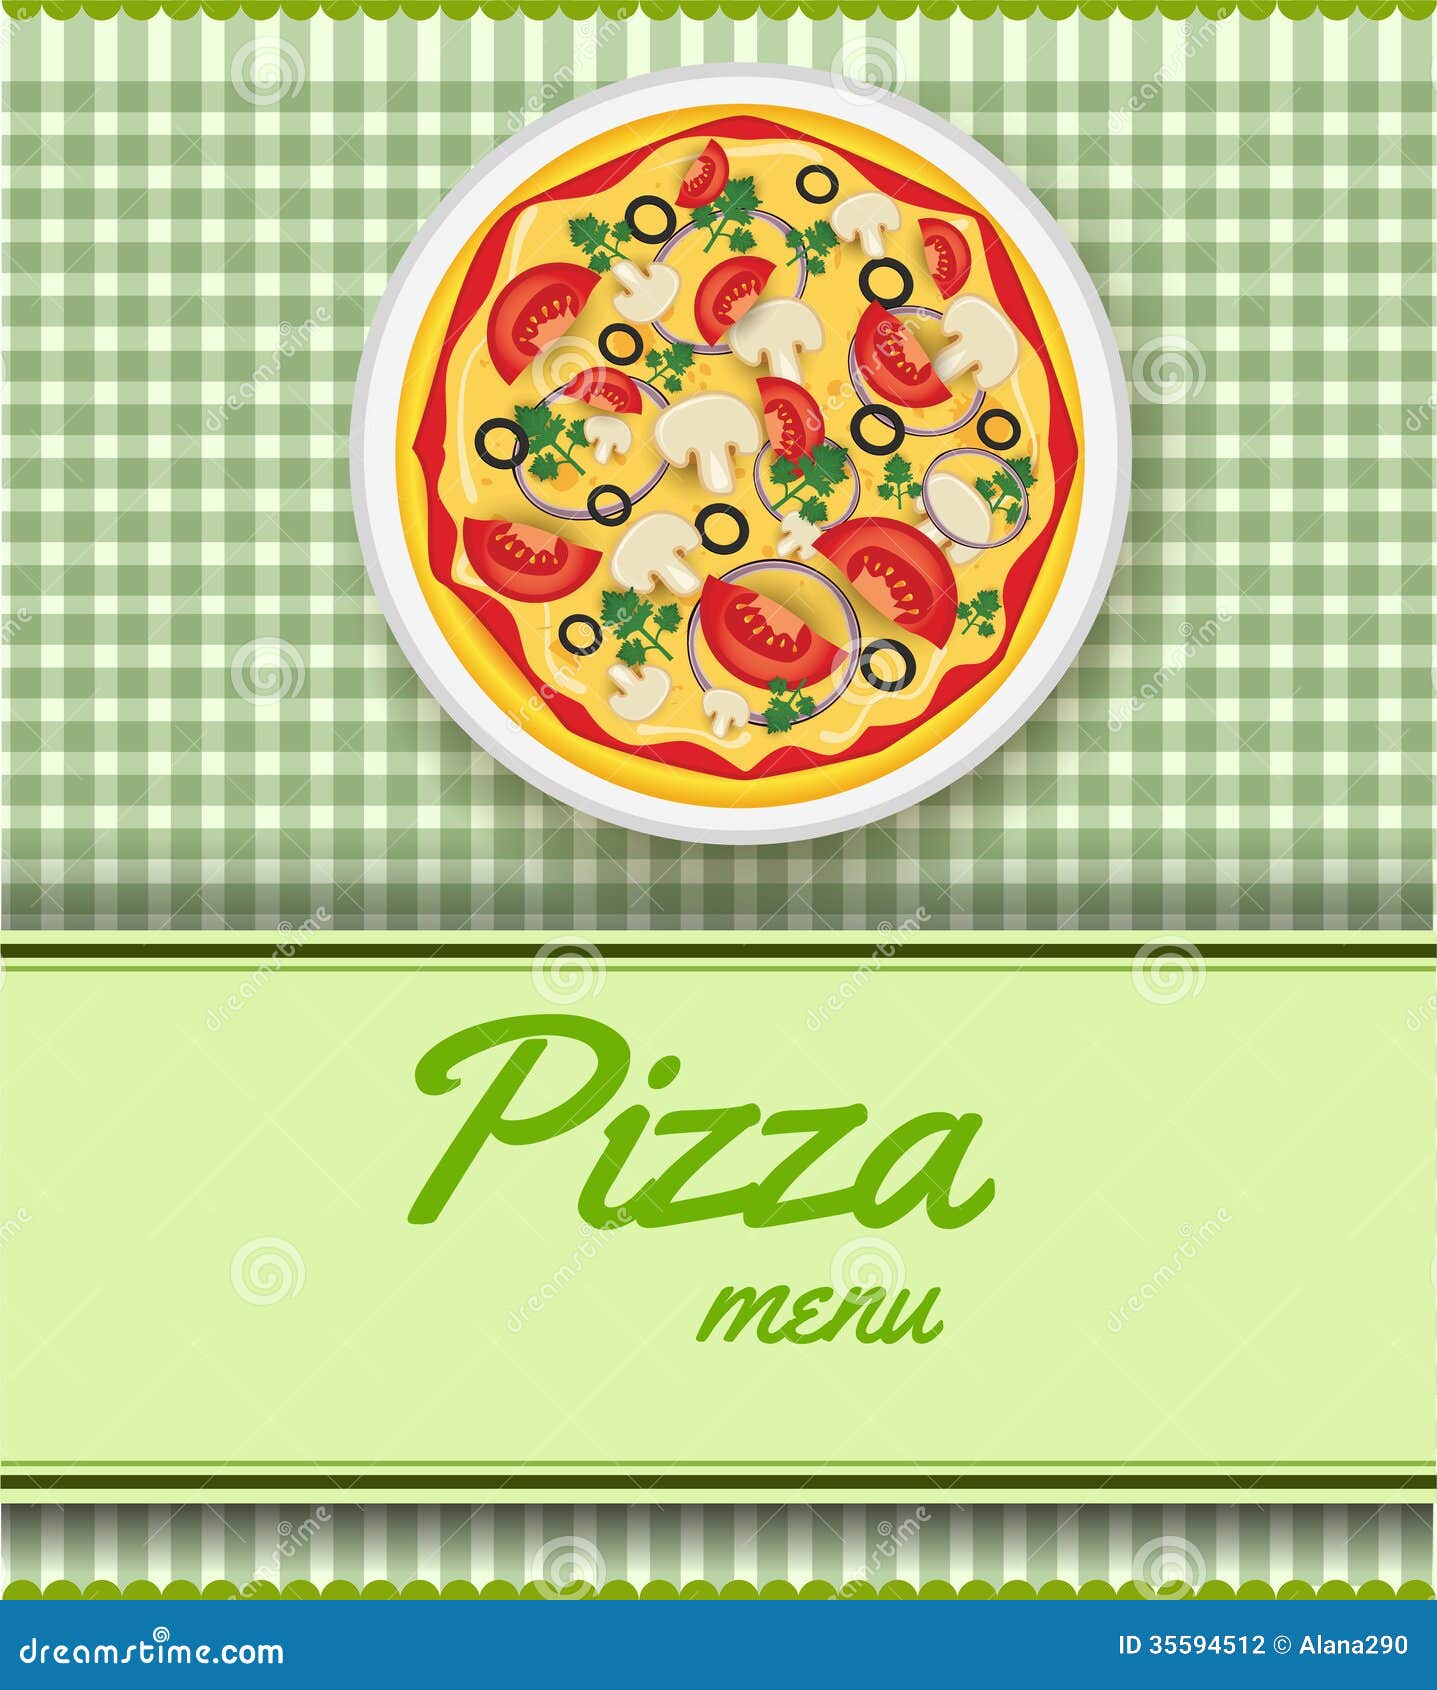 pizza menu clip art - photo #2